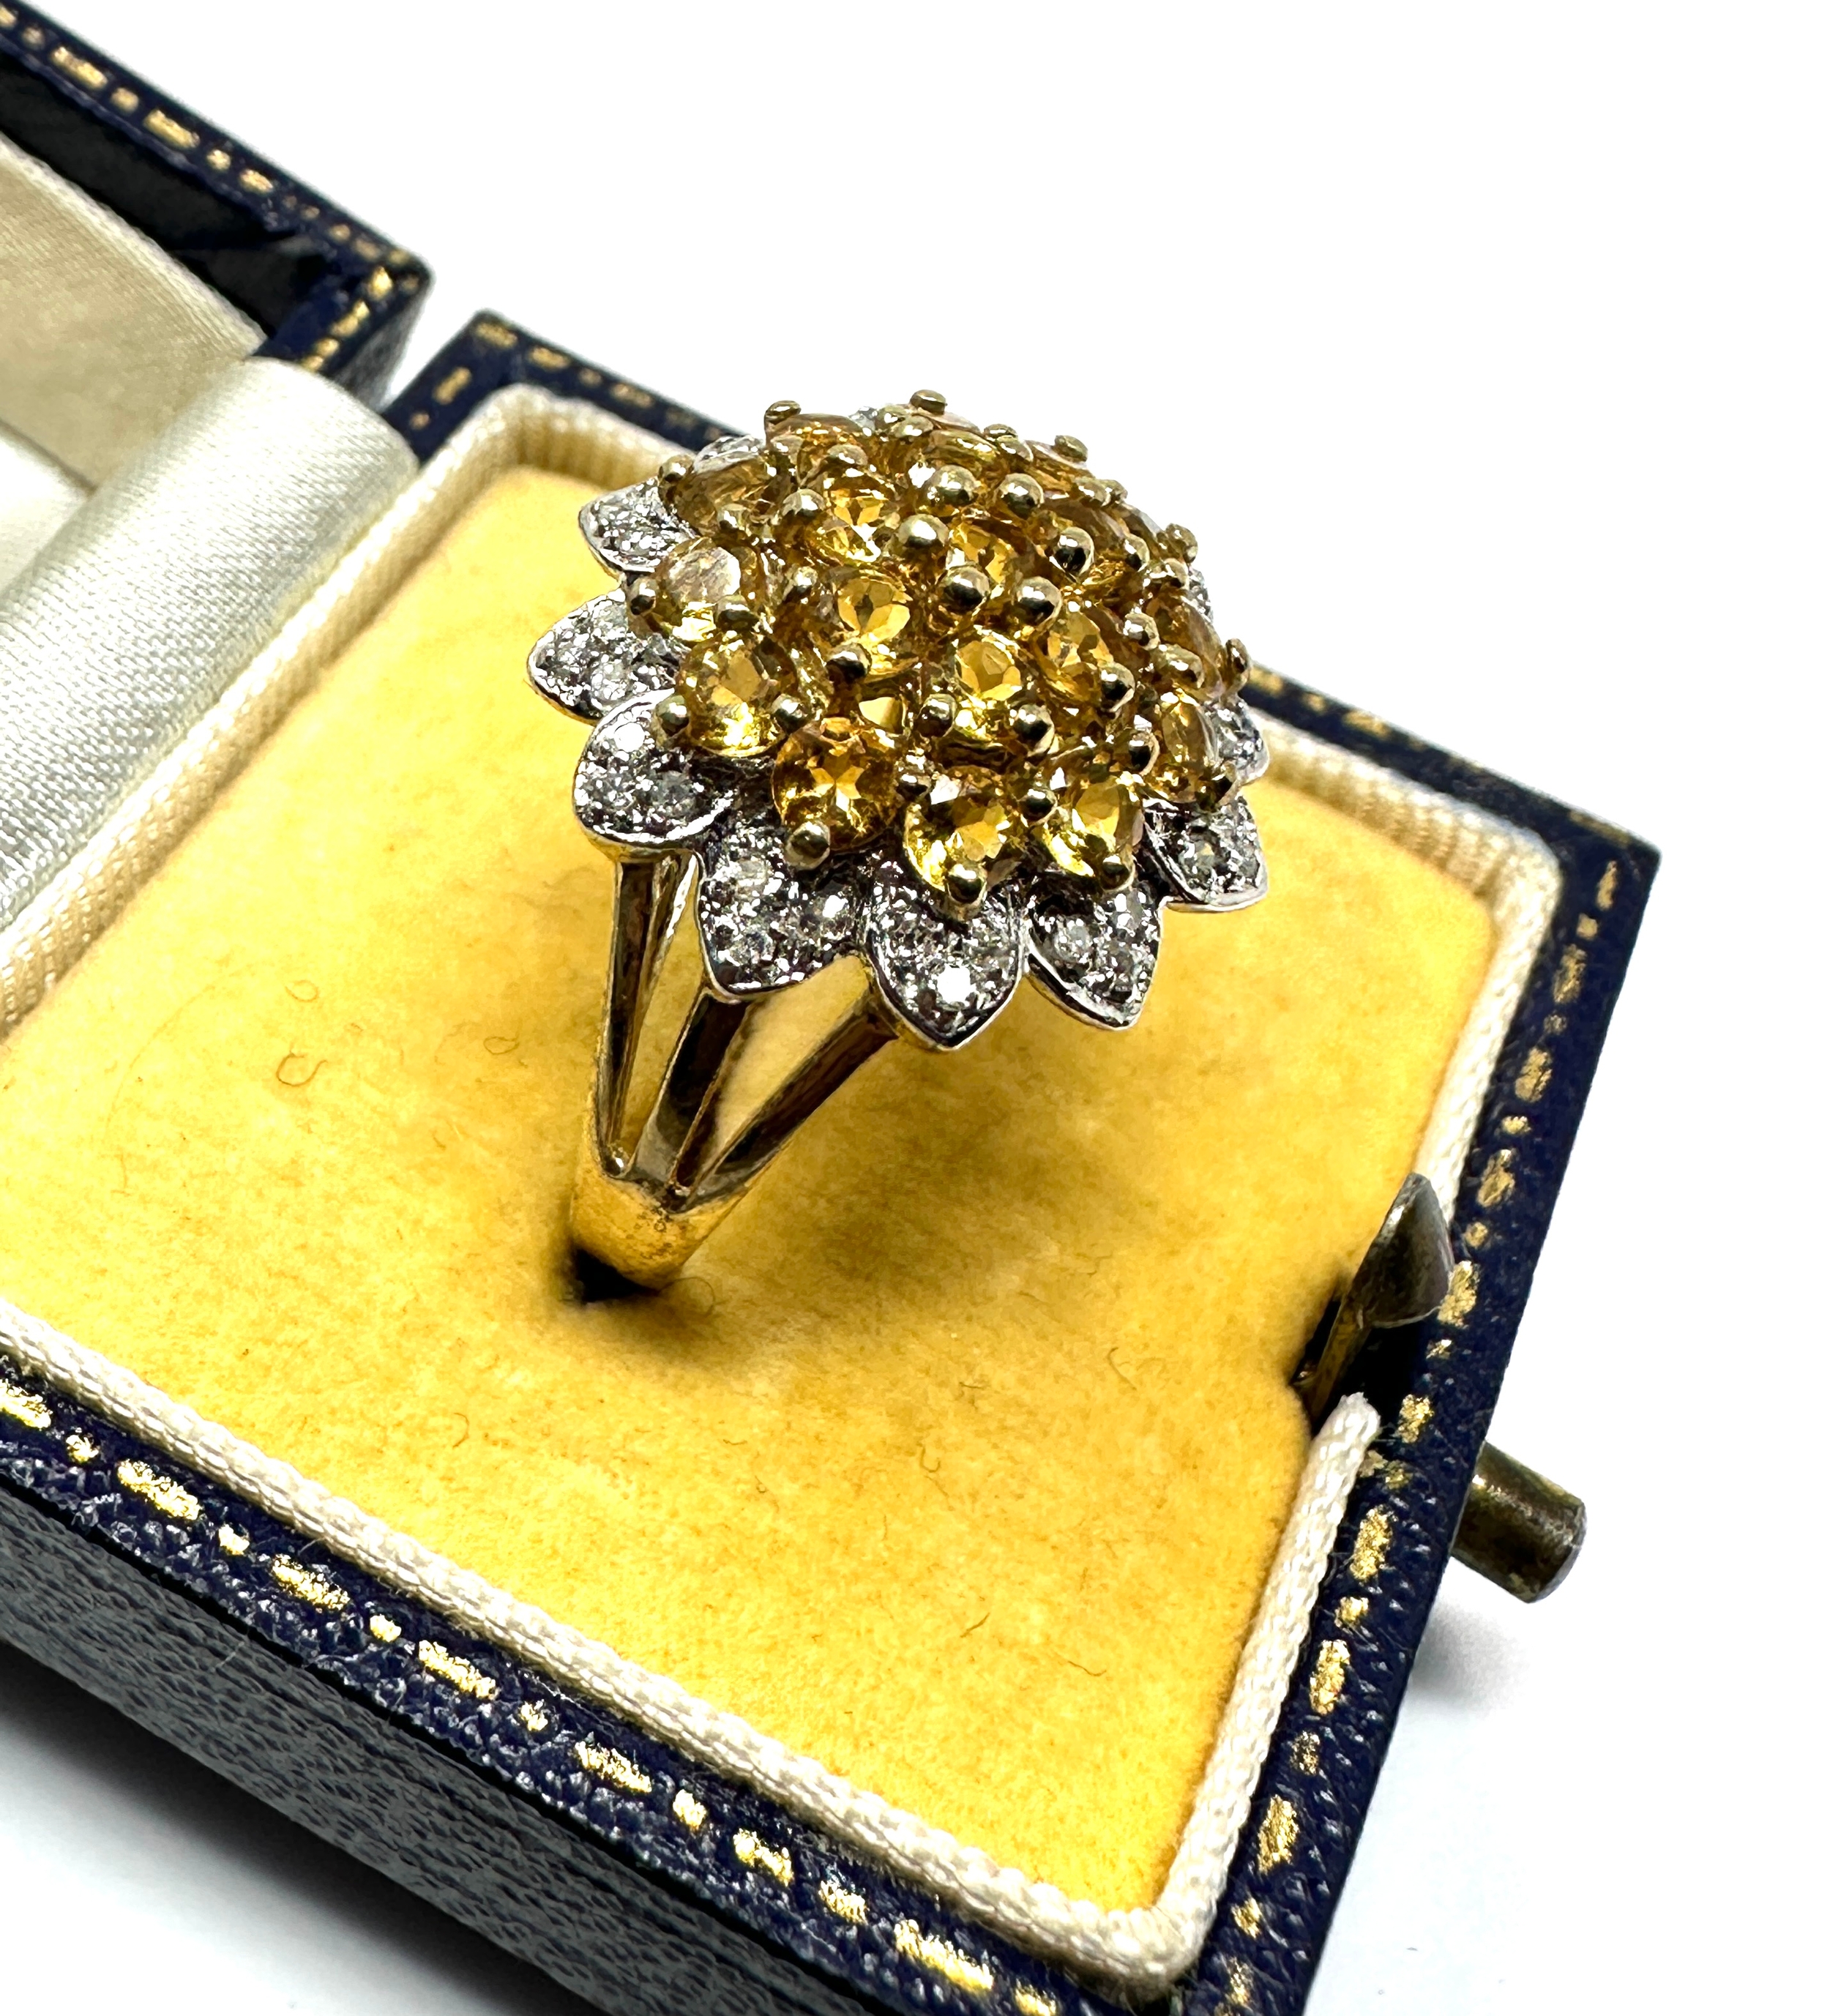 9ct gold diamond & yellow sapphire ring weight 3.4g - Image 2 of 4